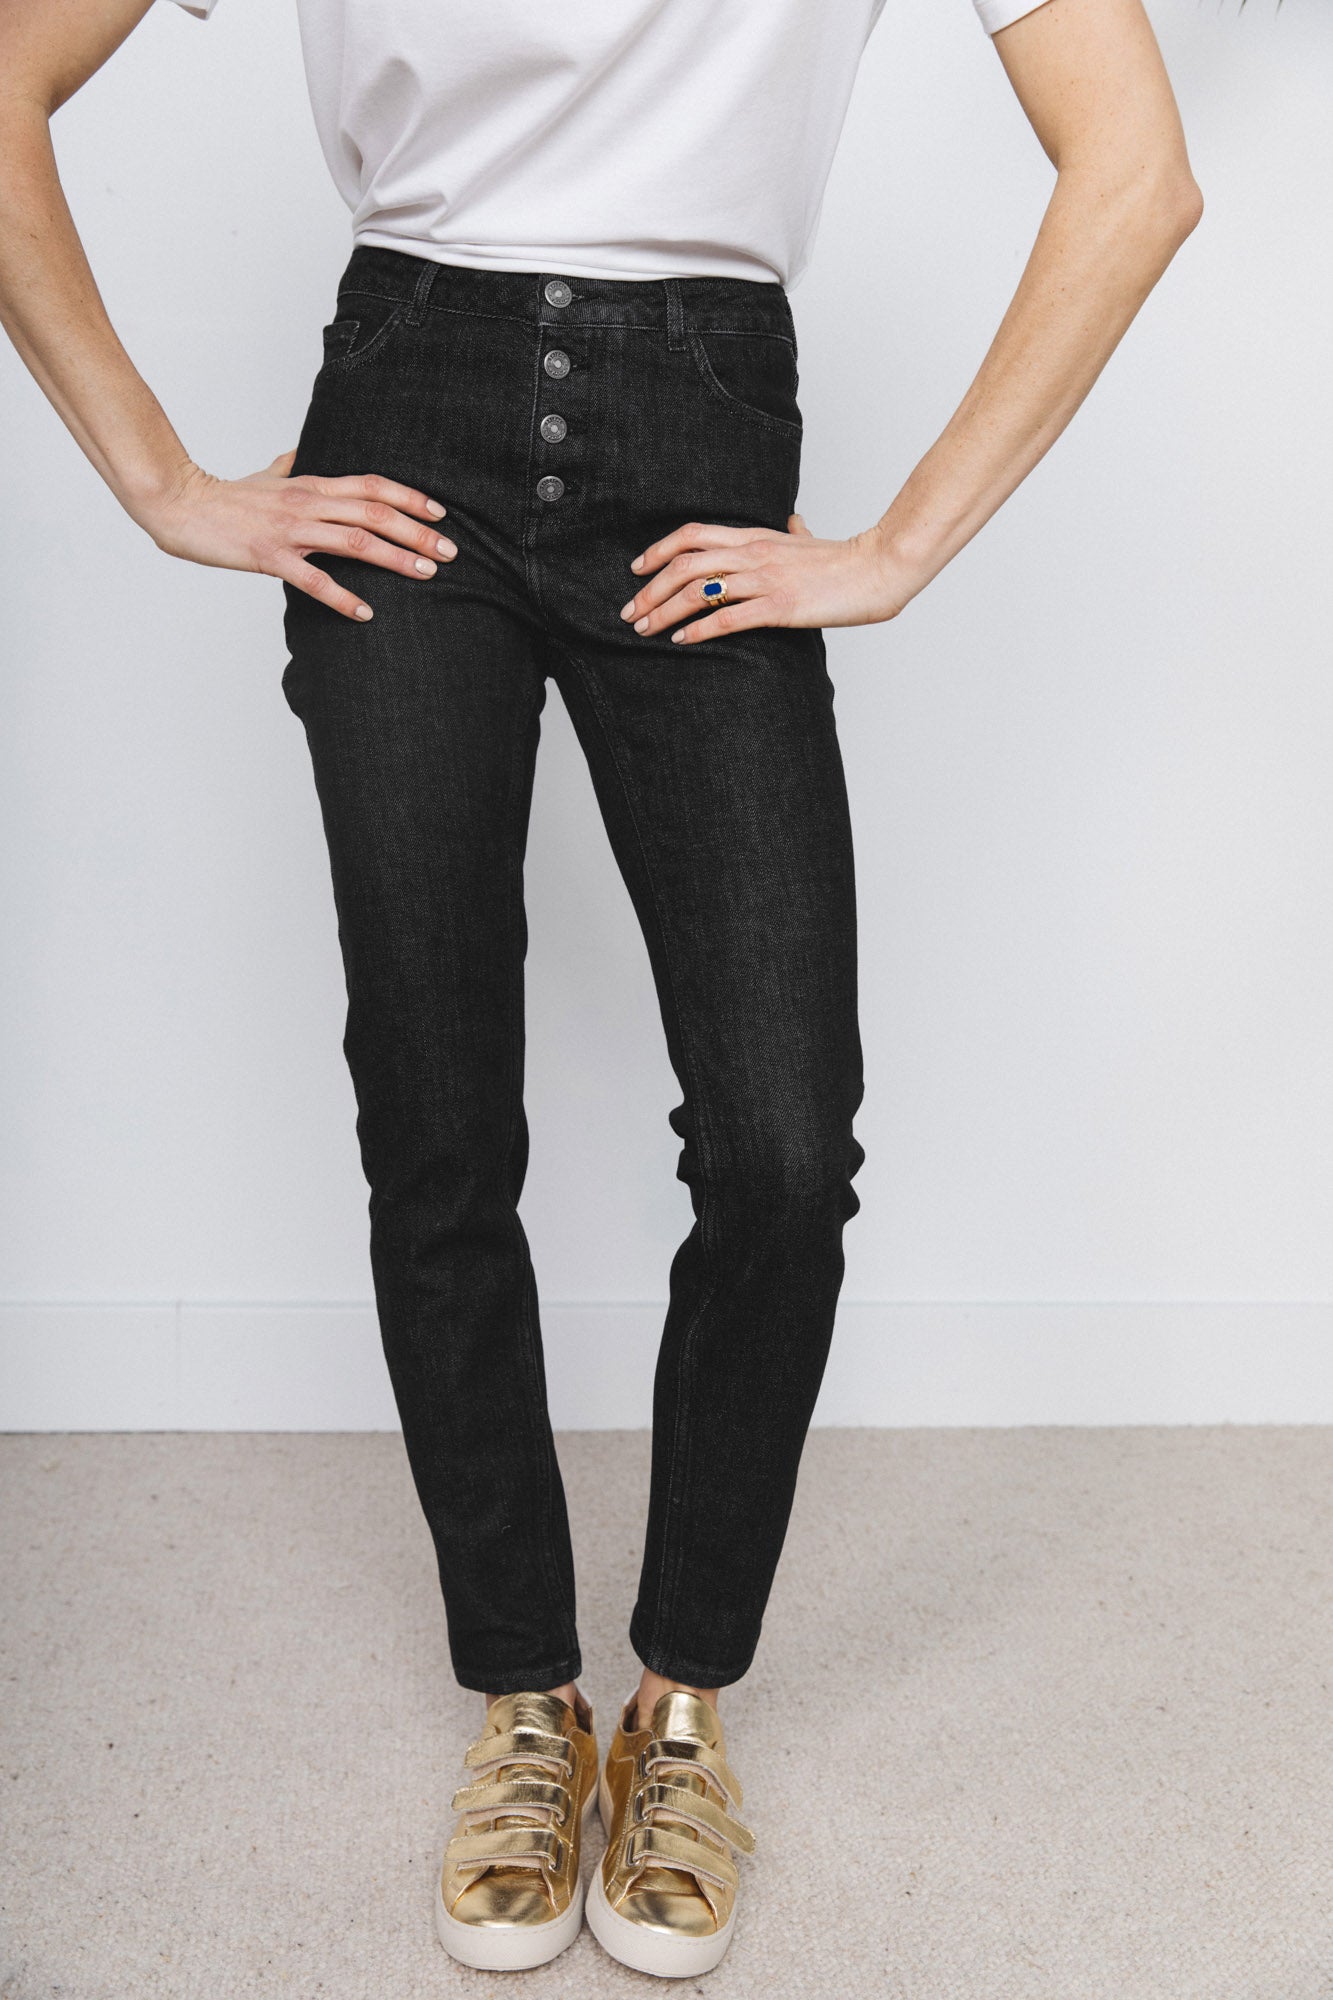 Heather black Joe jeans (old)